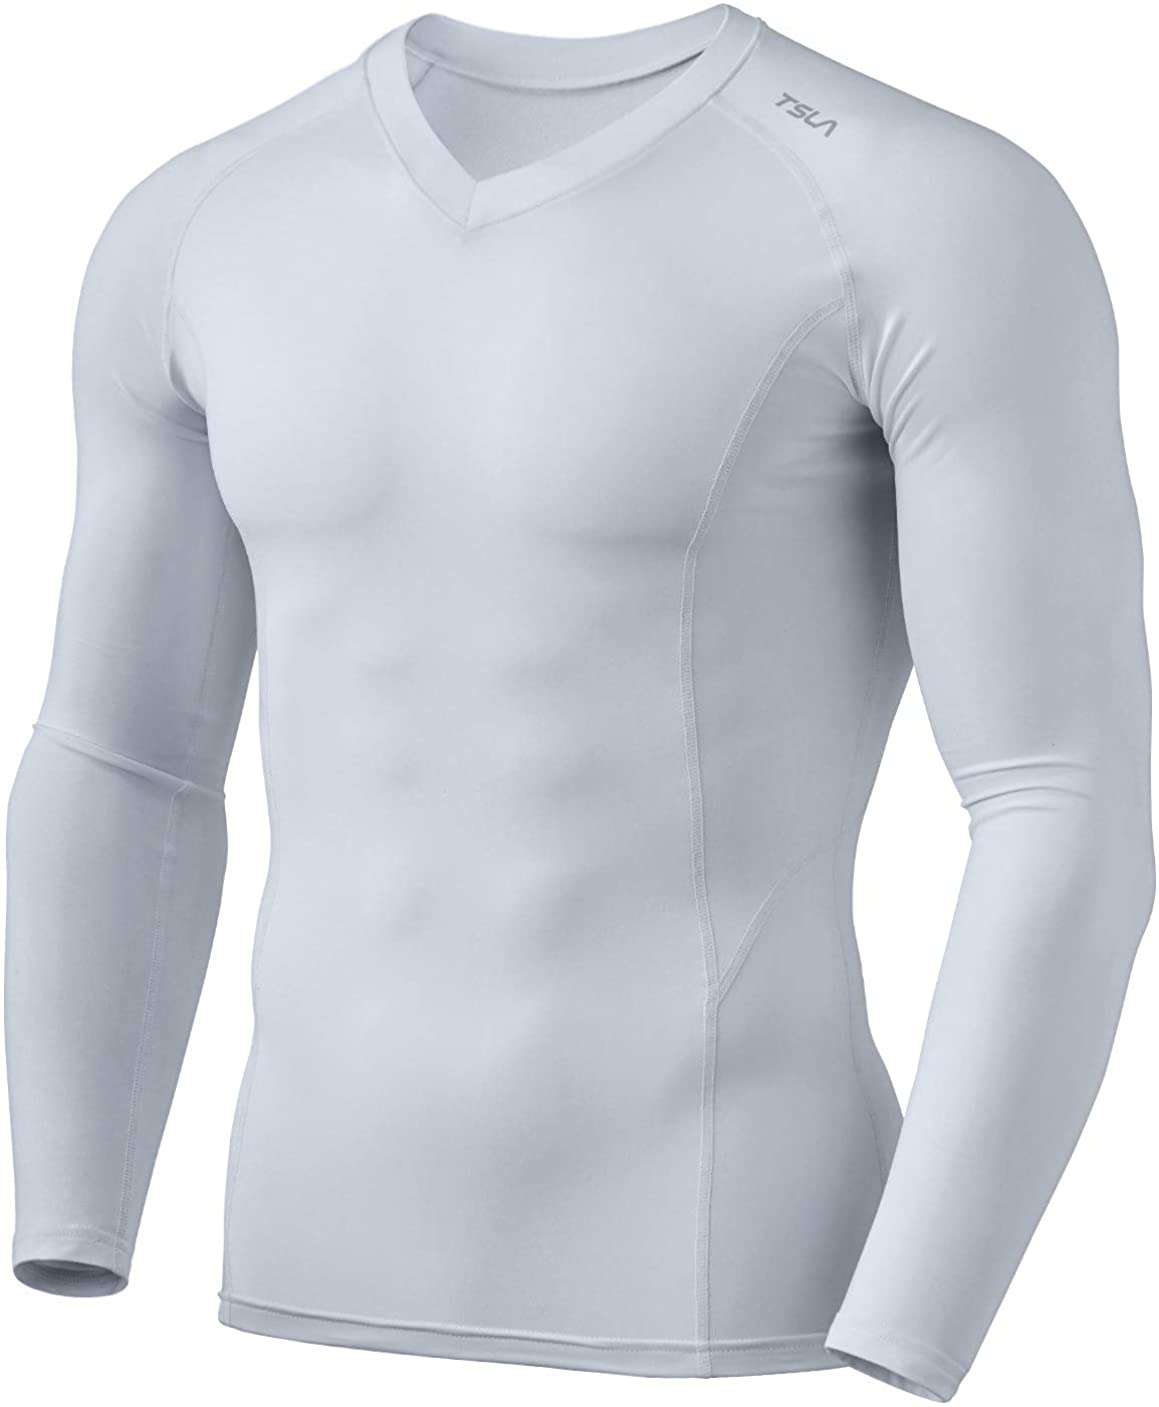 TSLA Mens Thermal Compression Shirt Long Sleeve Baselayer Long/Mock/V-Neck Top